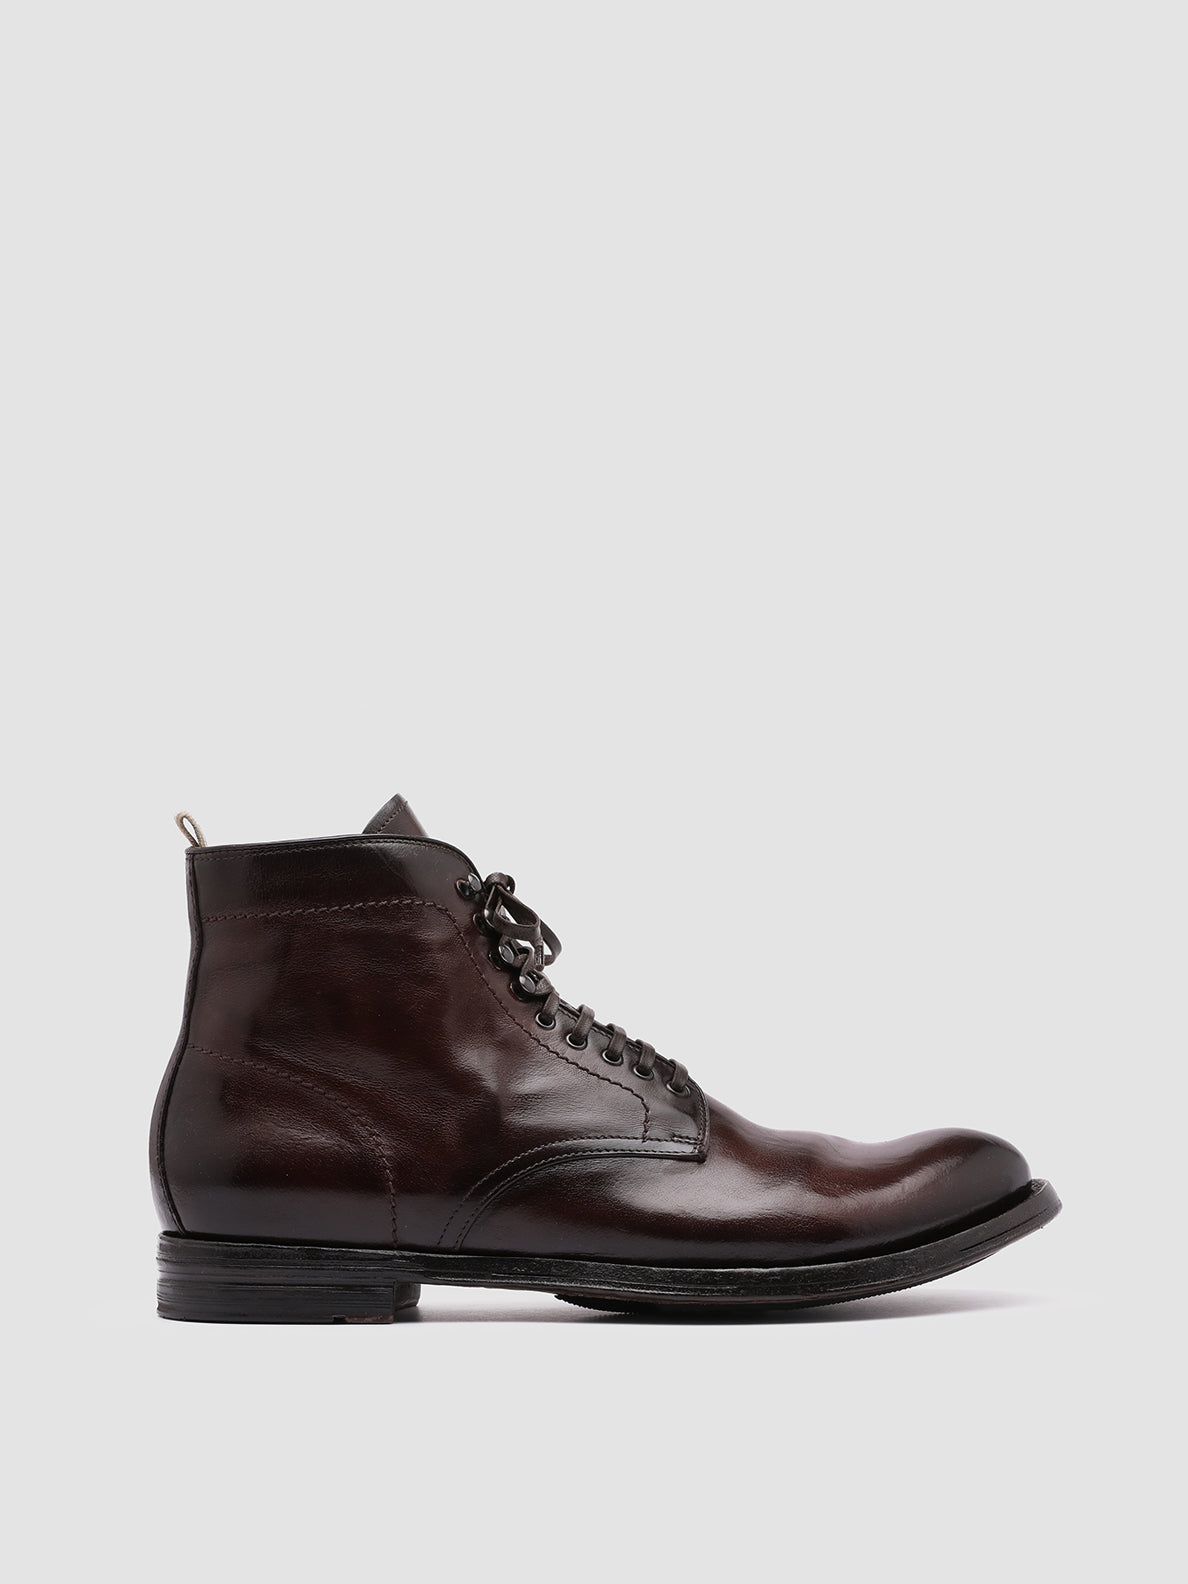 Men's Brown Leather Boots ANATOMIA 013 – Officine Creative EU